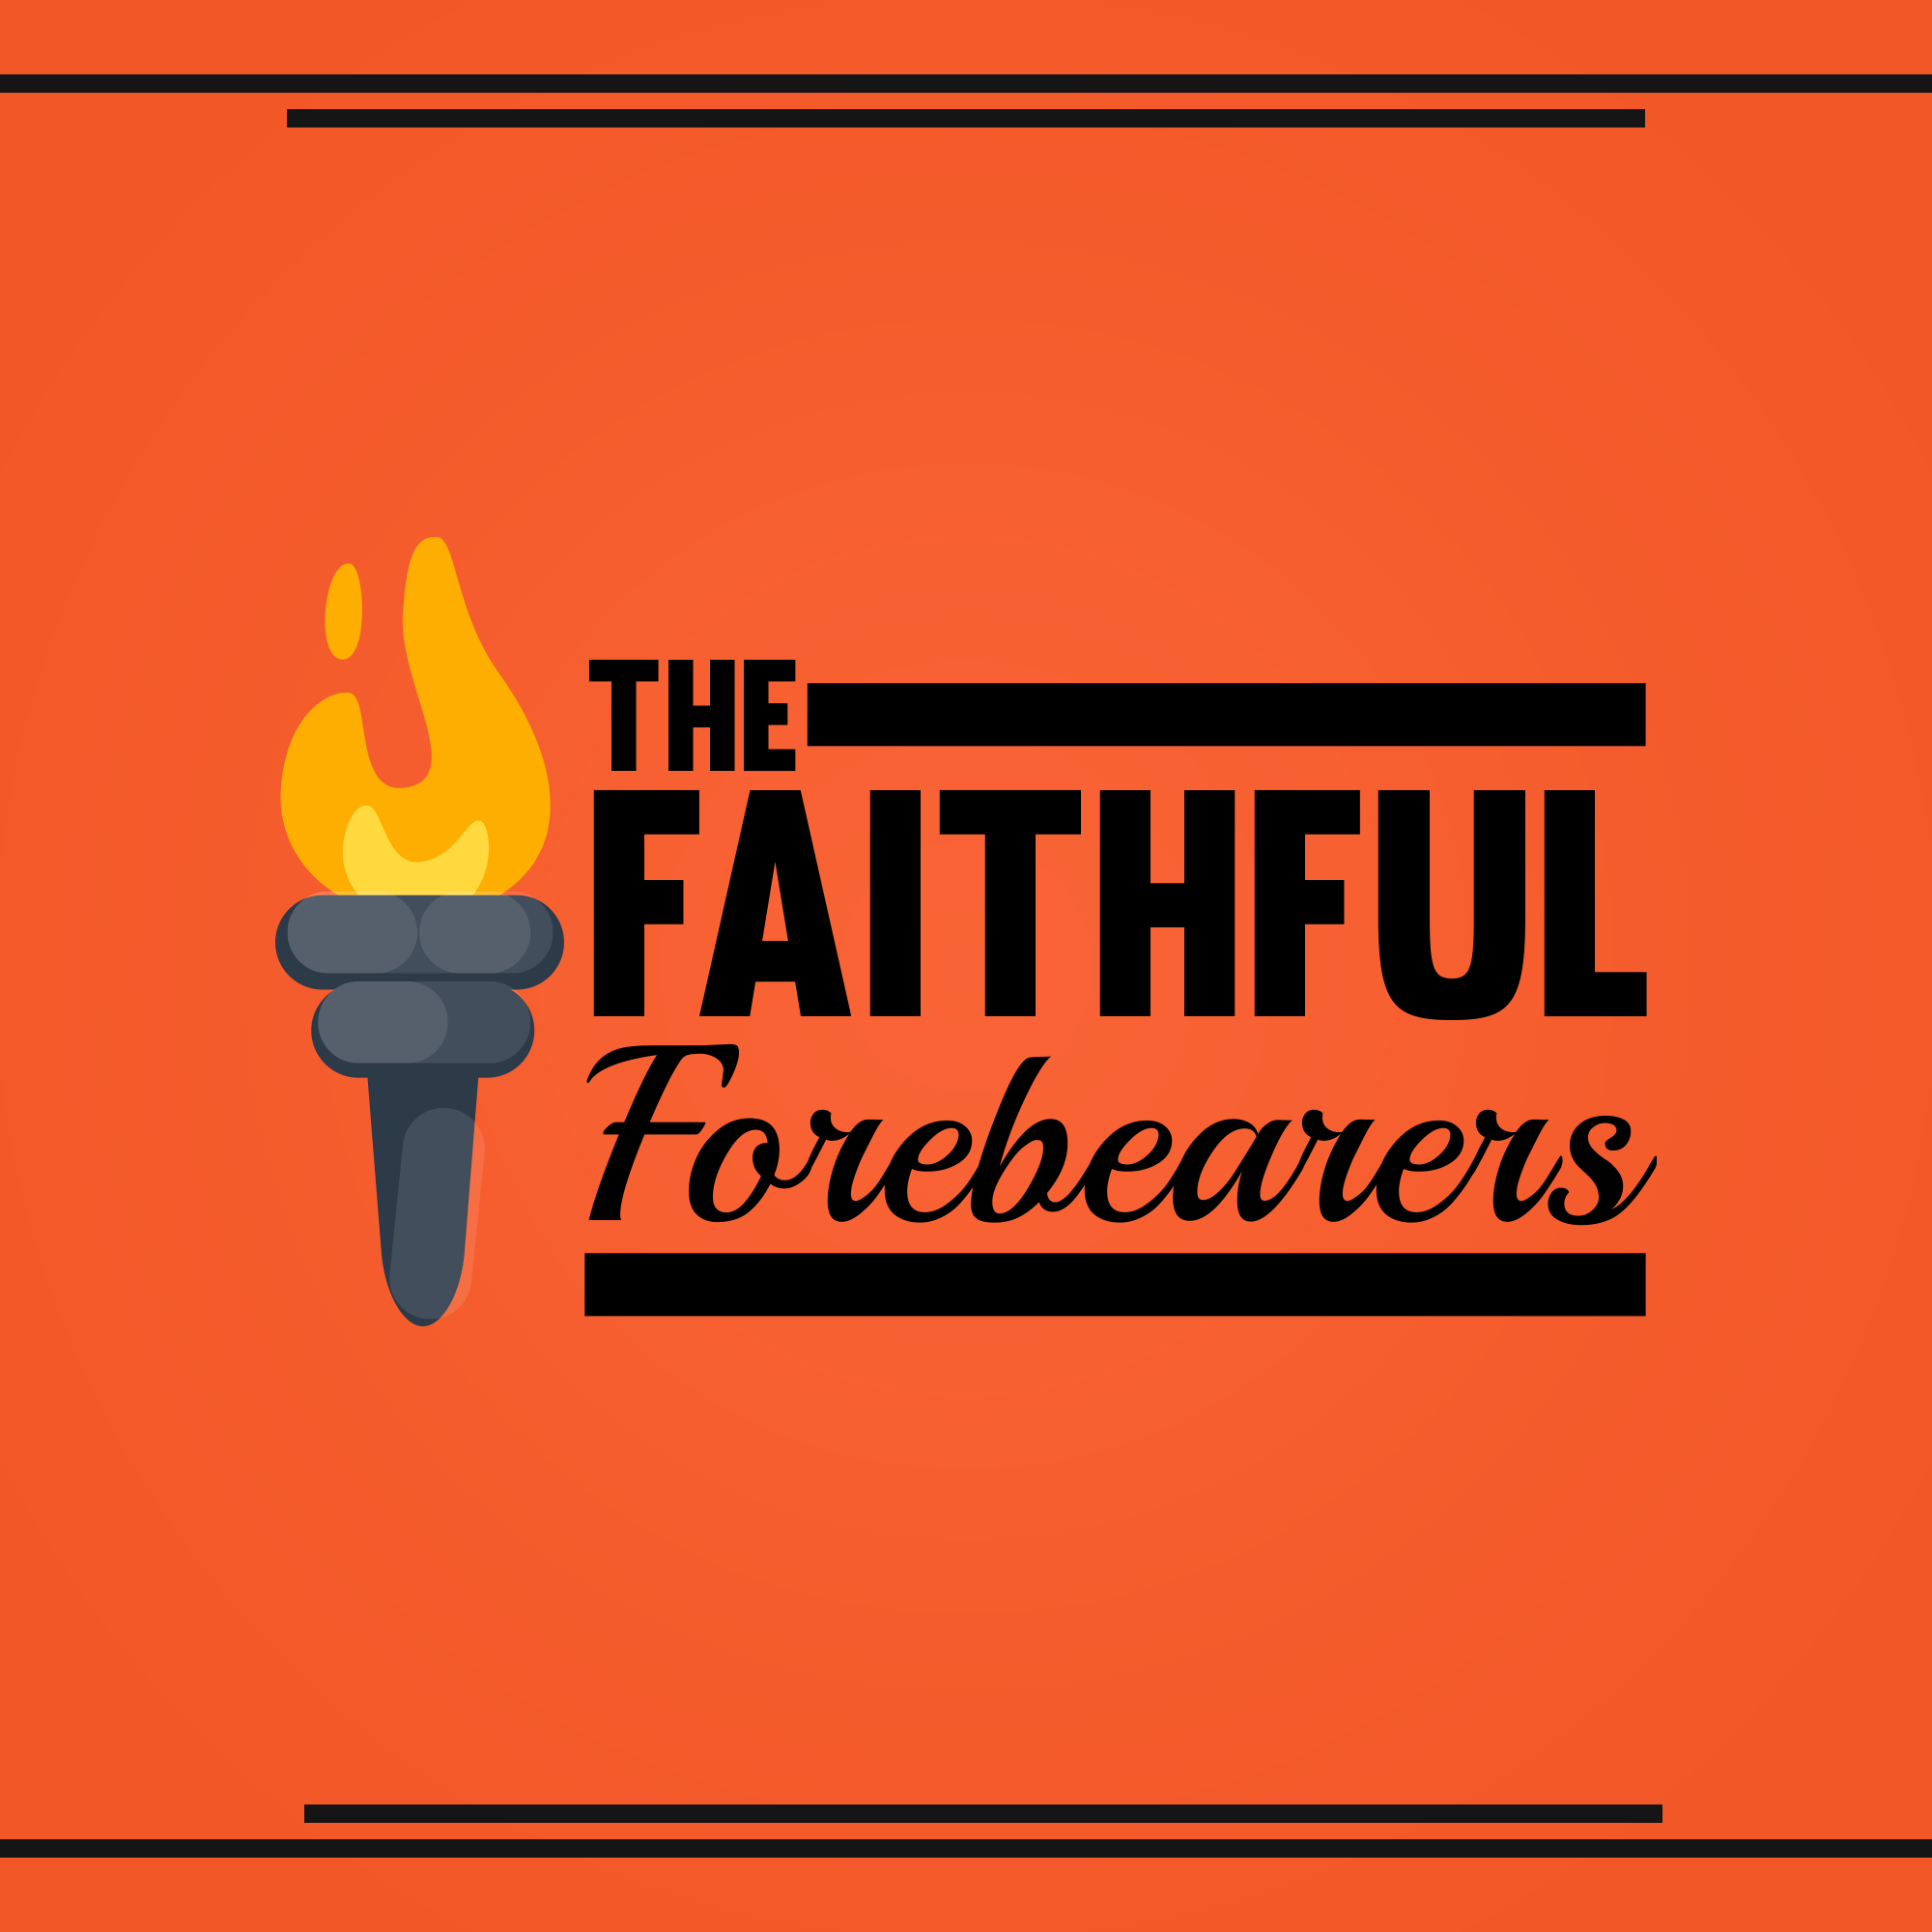 The Faithful Forebearers